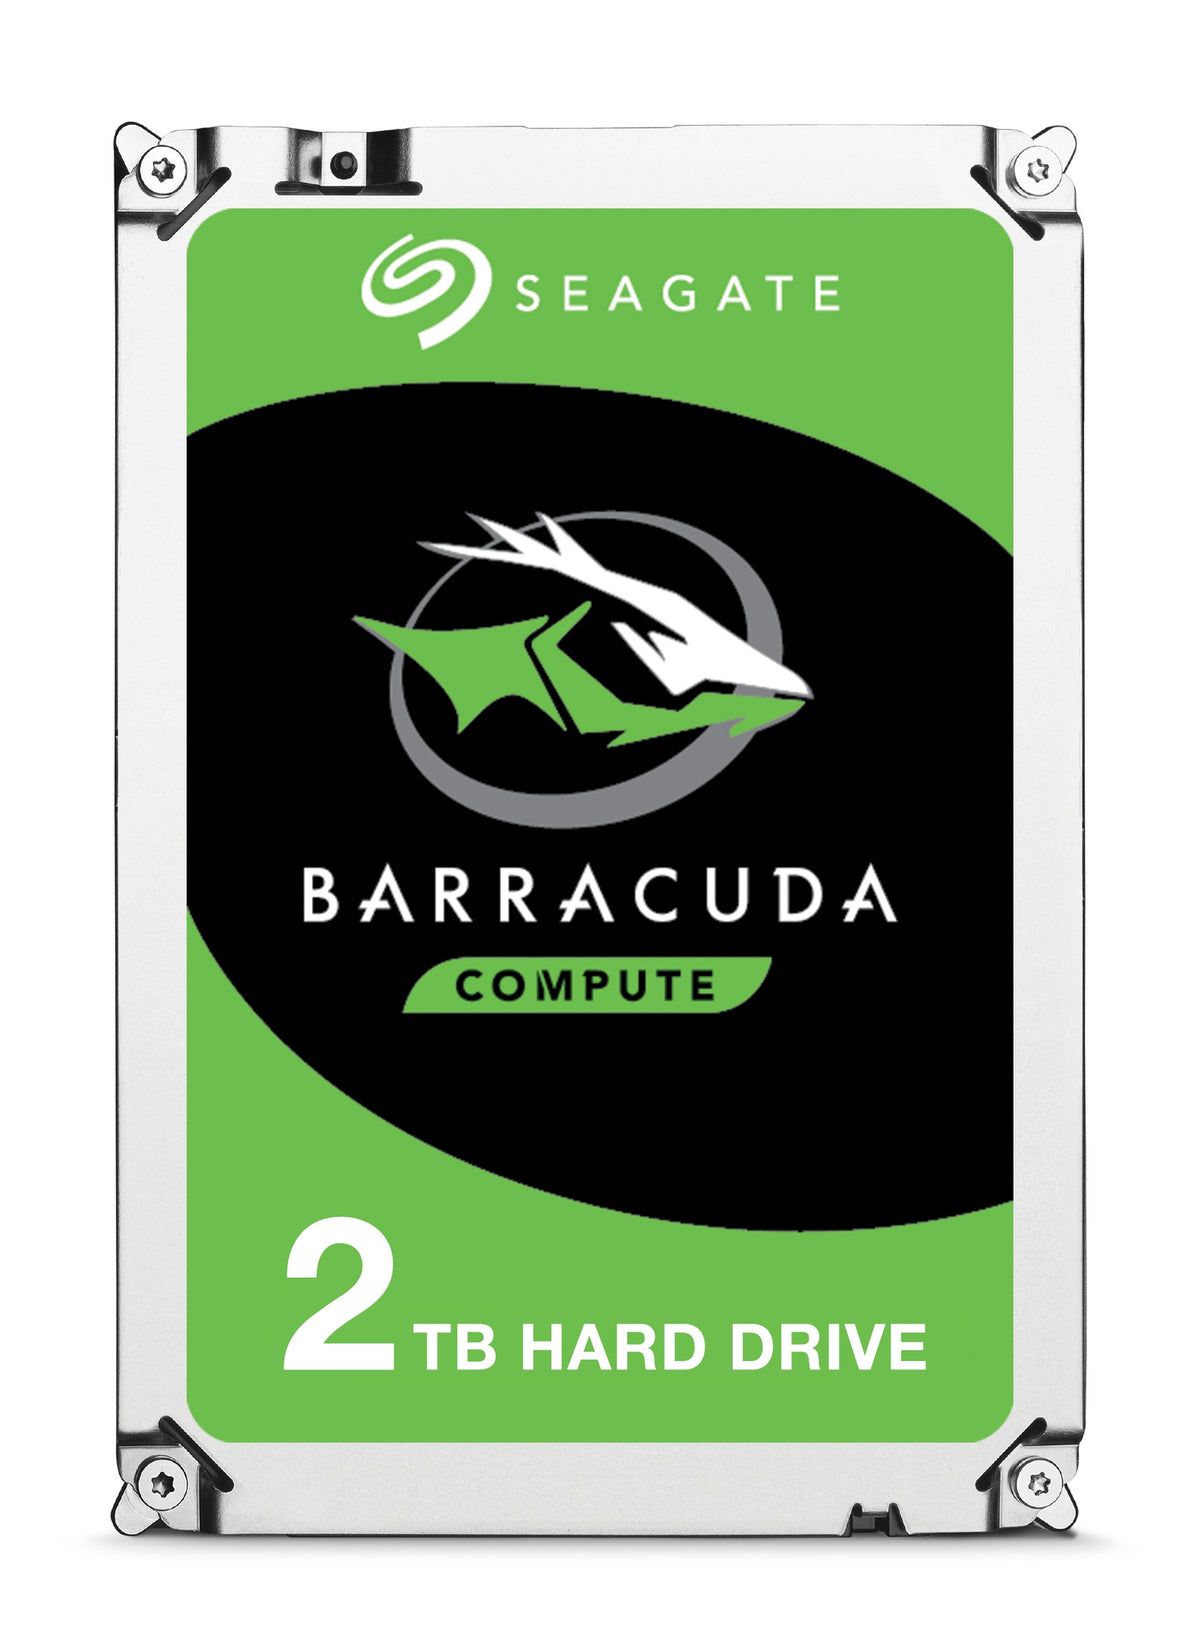 Seagate Barracuda  Internal Hard Drive ST2000DM008 internal hard drive 3.5" 2000 GB Serial ATA III